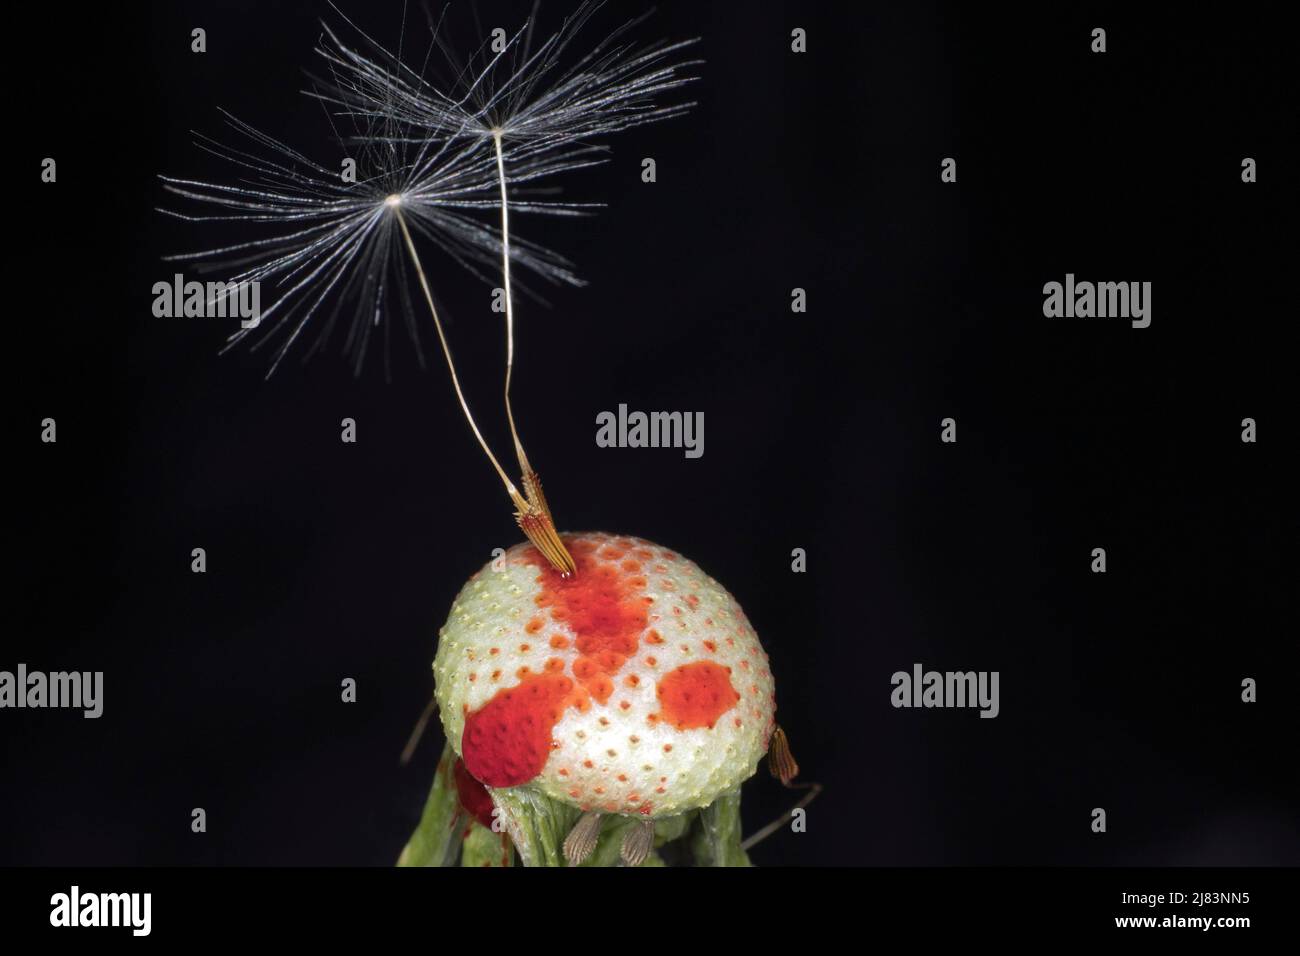 Symbolic image, seed umbels and bleeding dandelion (Taraxacum sect. Ruderalia), studio photograph with black background Stock Photo